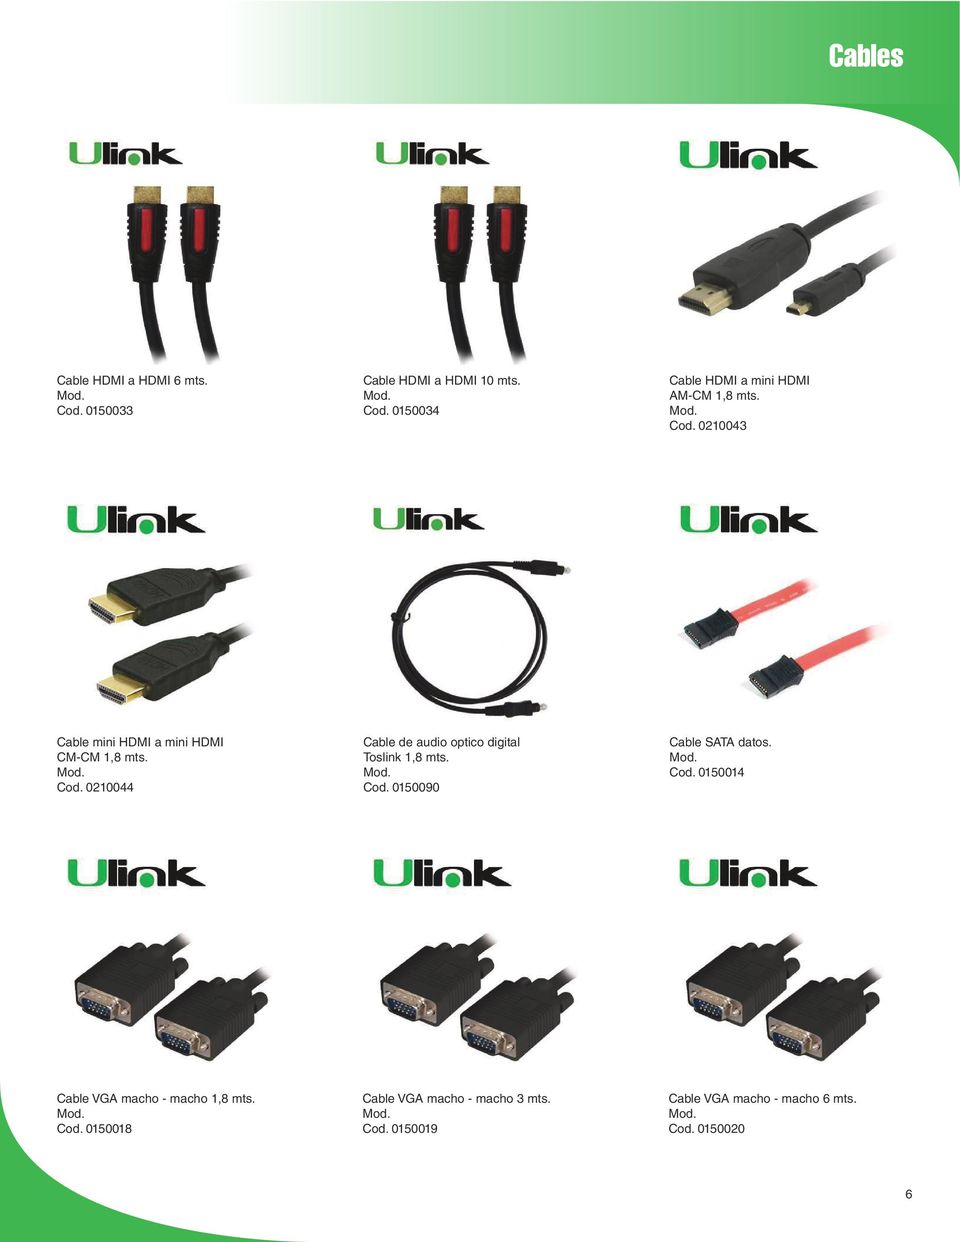 0210044 Cable de audio optico digital Toslink 1,8 mts. Cod. 0150090 Cable SATA datos. Cod. 0150014 Cable VGA macho - macho 1,8 mts.